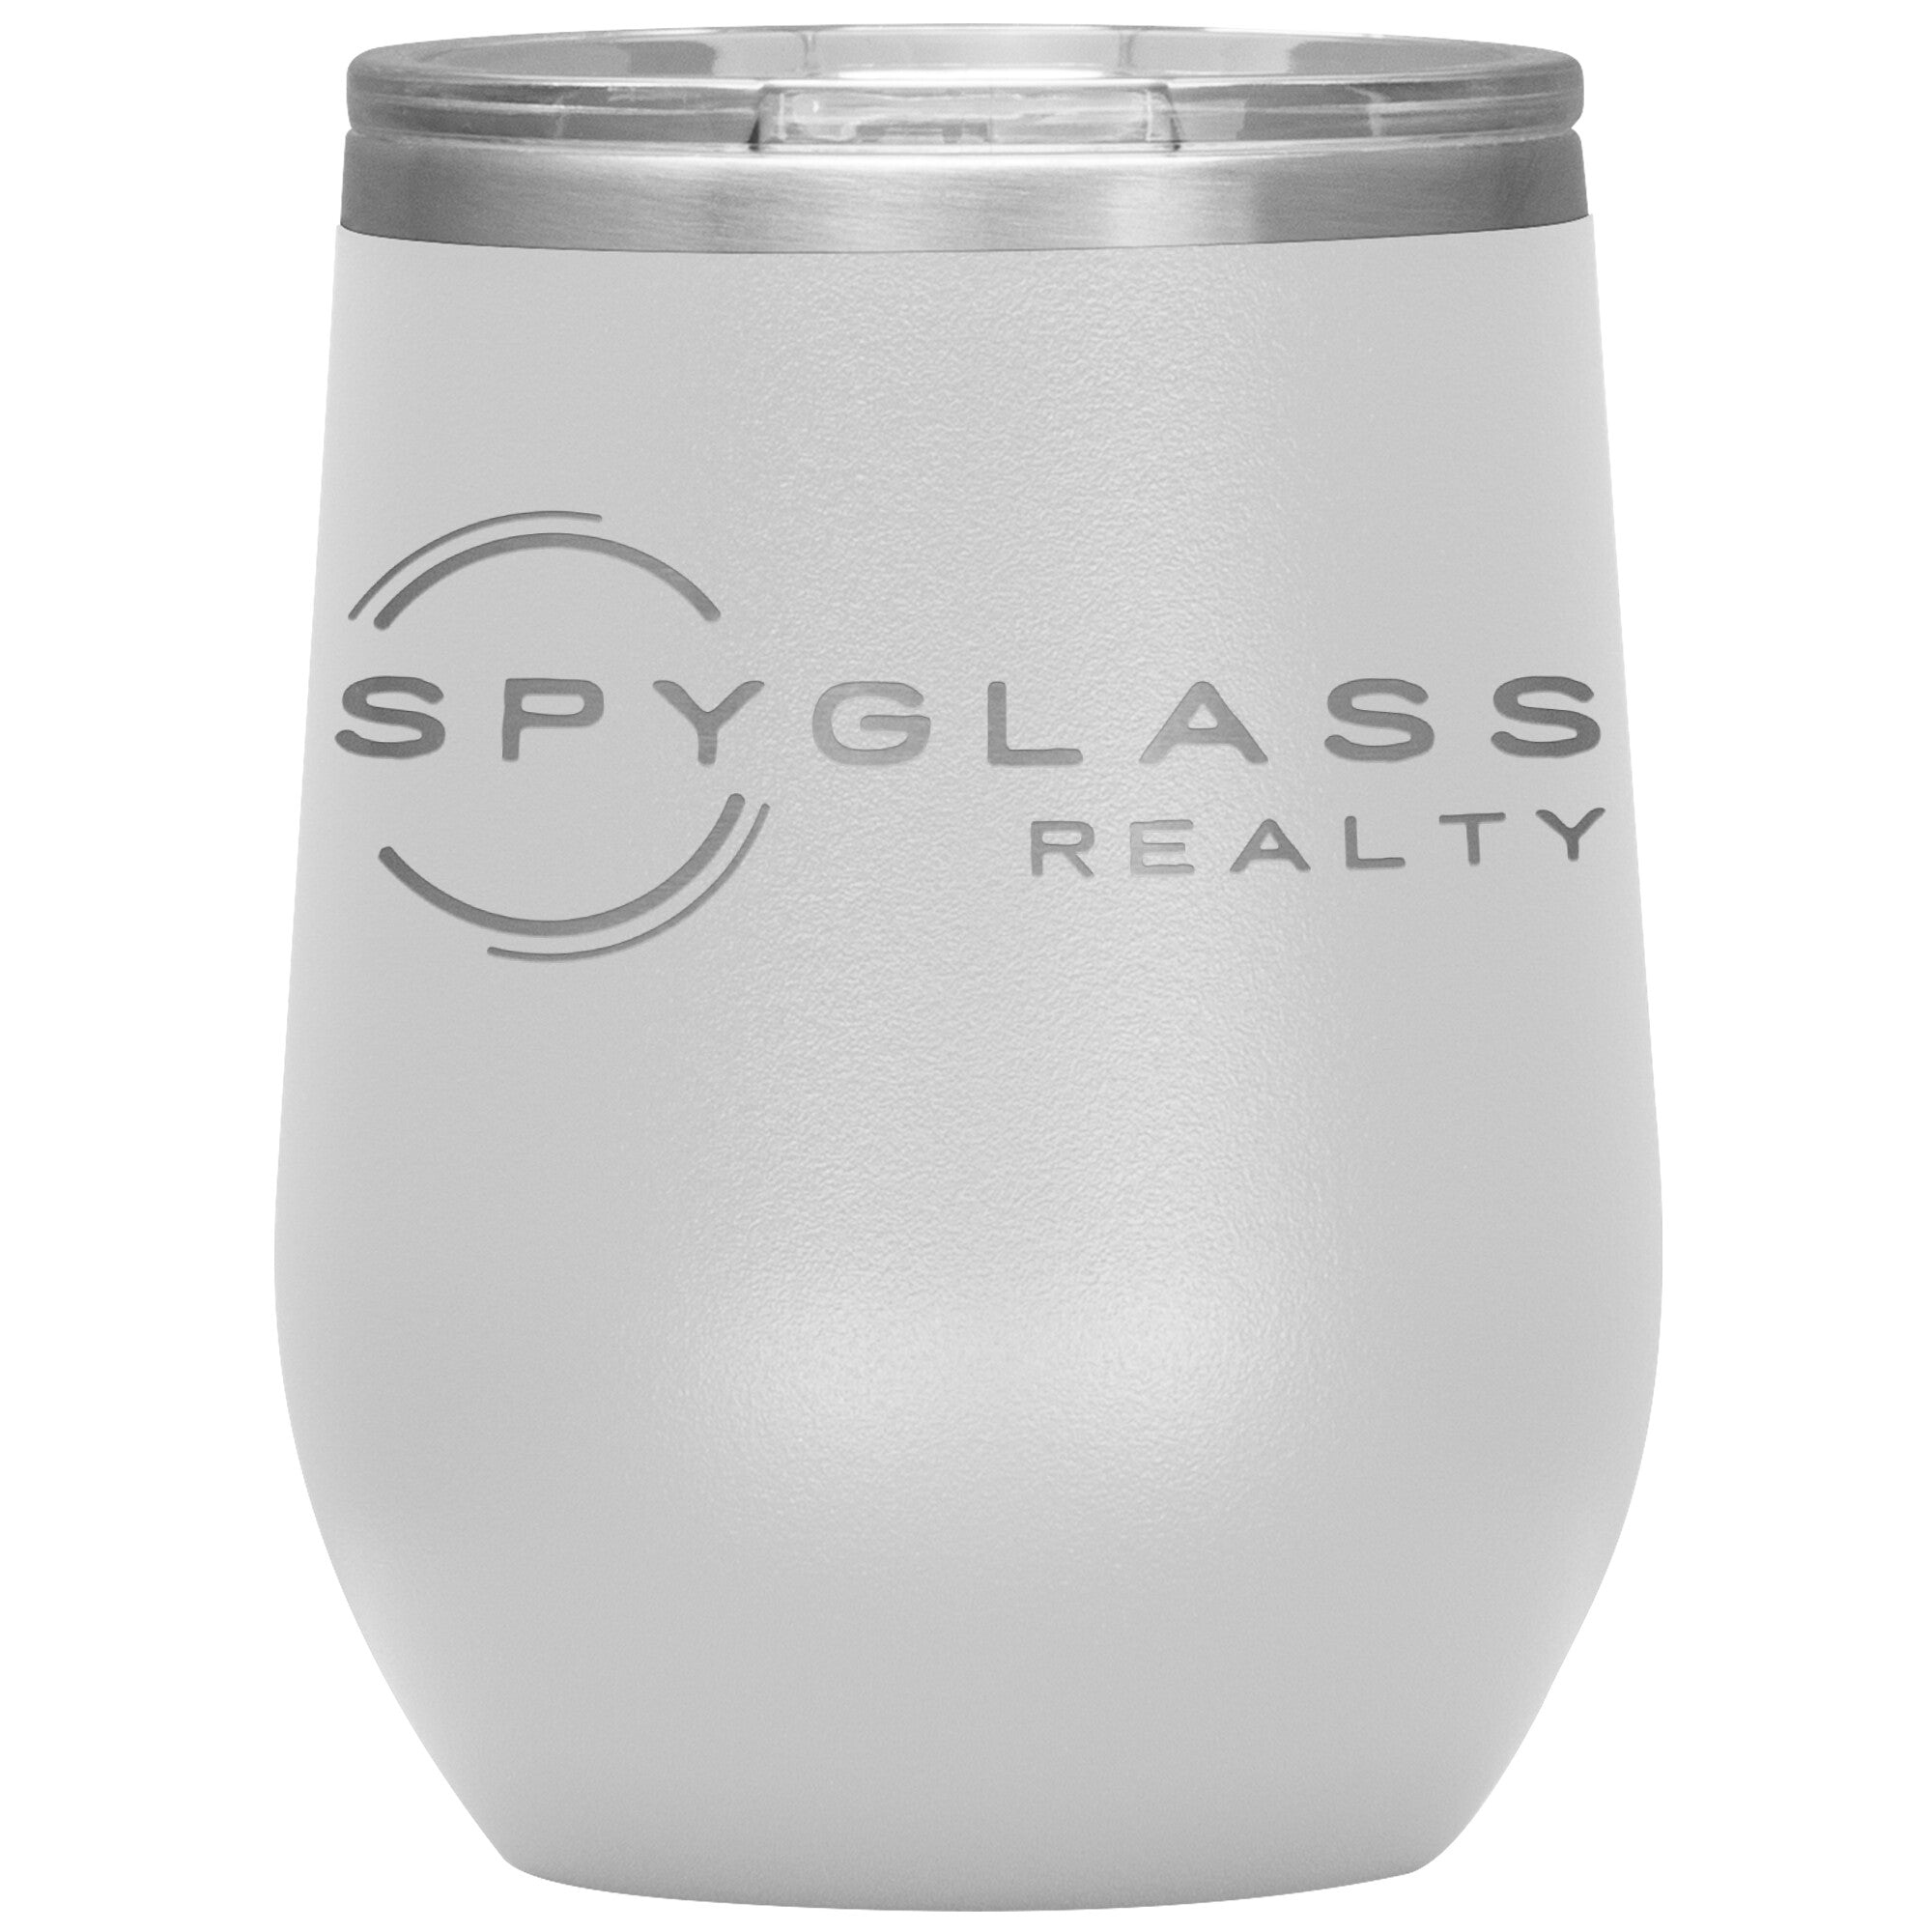 12oz Spyglass Realty Wine Insulated Tumbler